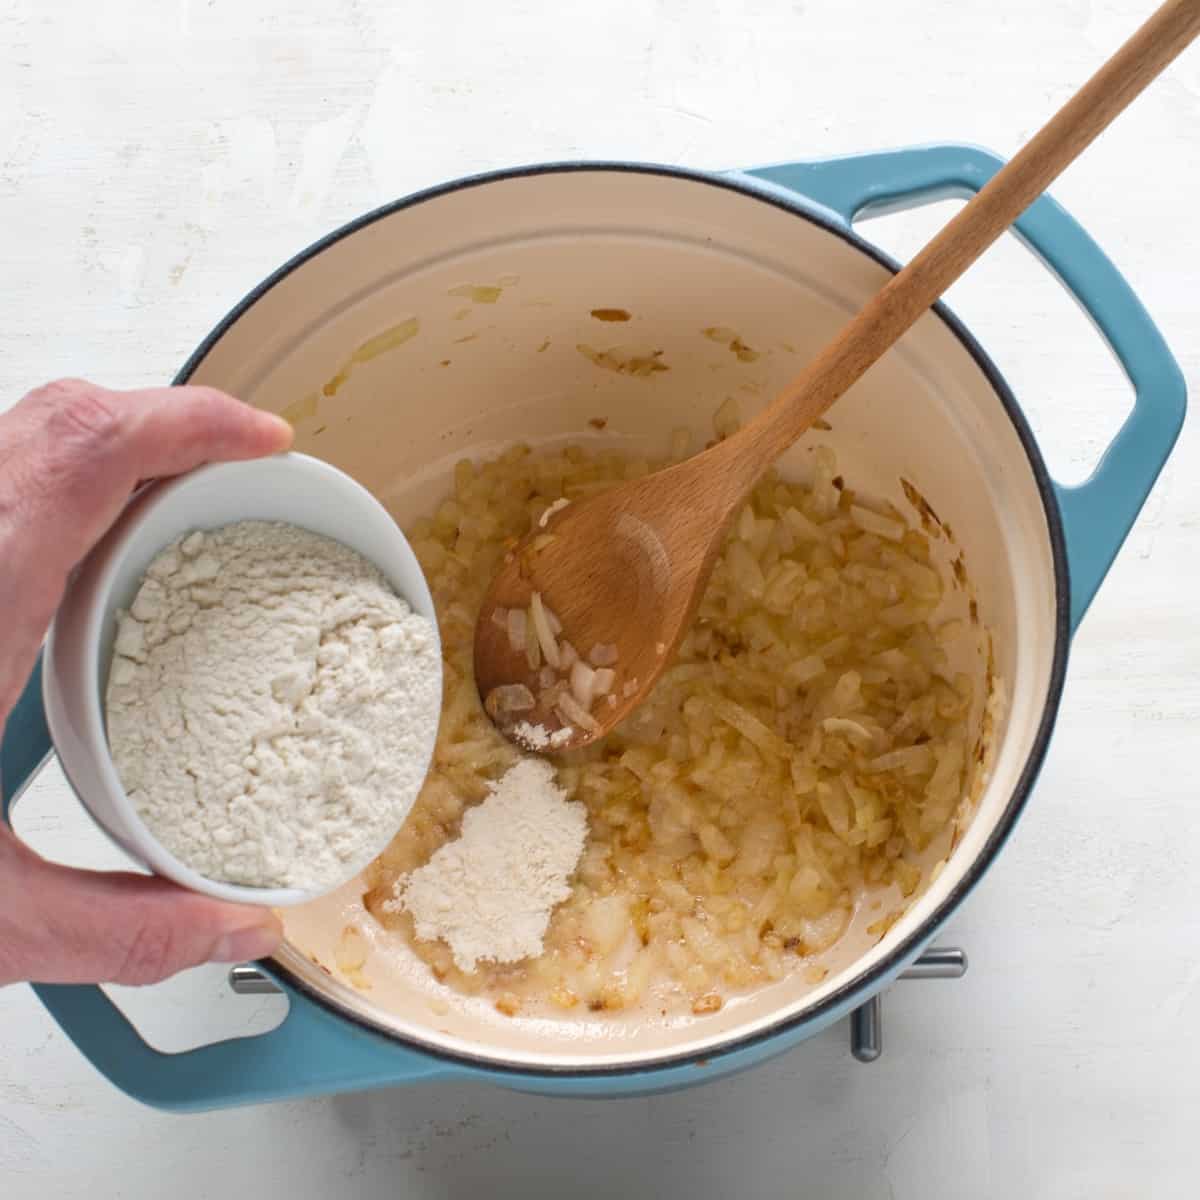 Making onion roux, pouring flour to a pot.